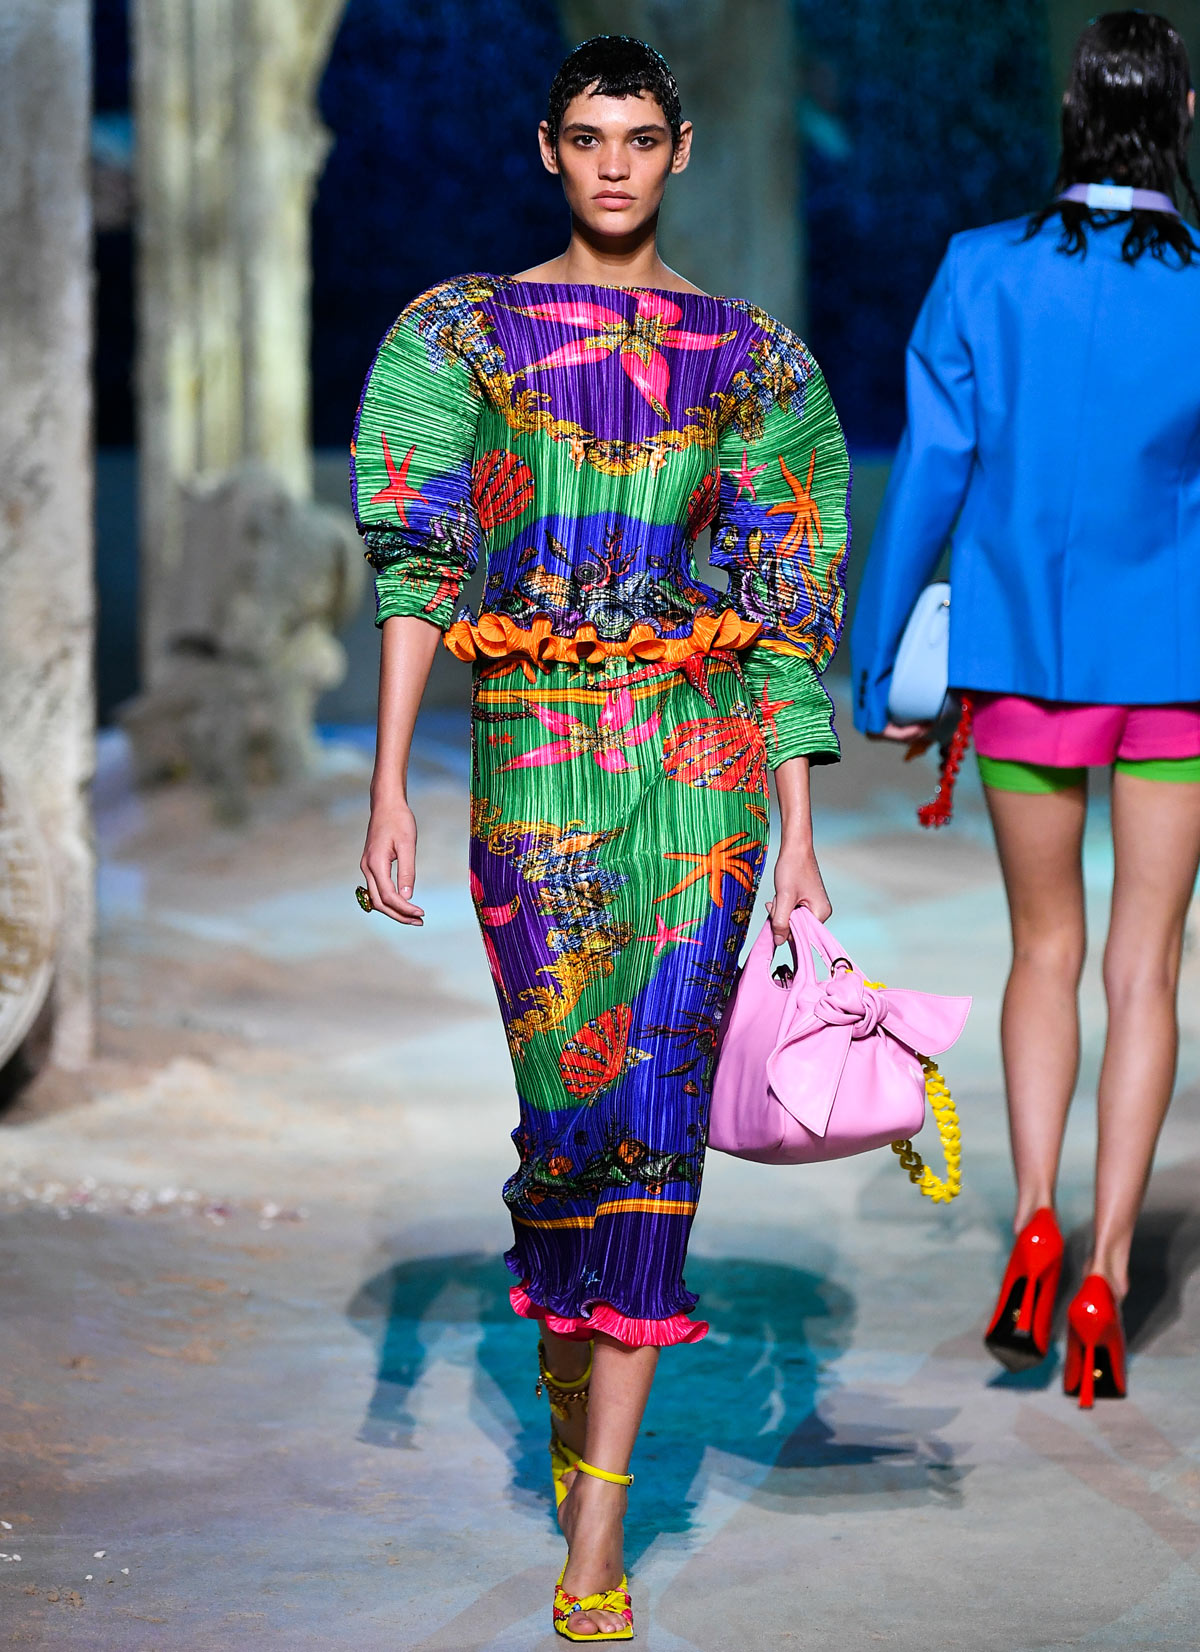 Irina Shayk adds flair to Versace show in Milan - Rediff.com Get Ahead